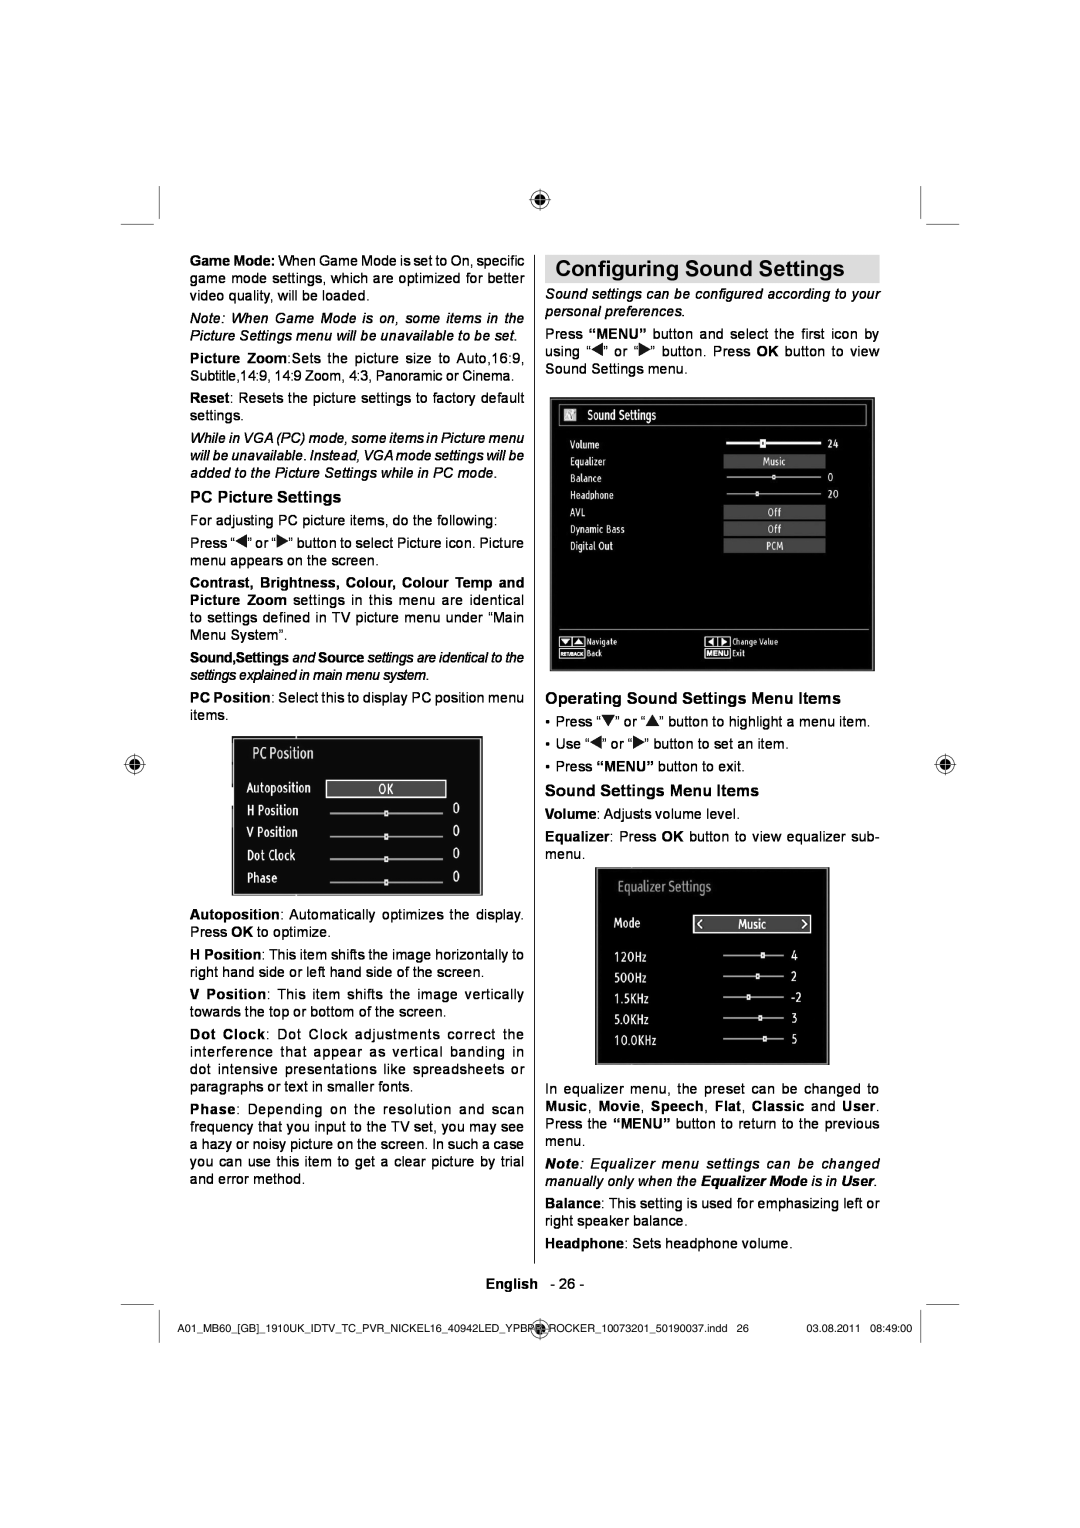 Sharp LC-40LE510E Conﬁguring Sound Settings, PC Picture Settings, Operating Sound Settings Menu Items, English 